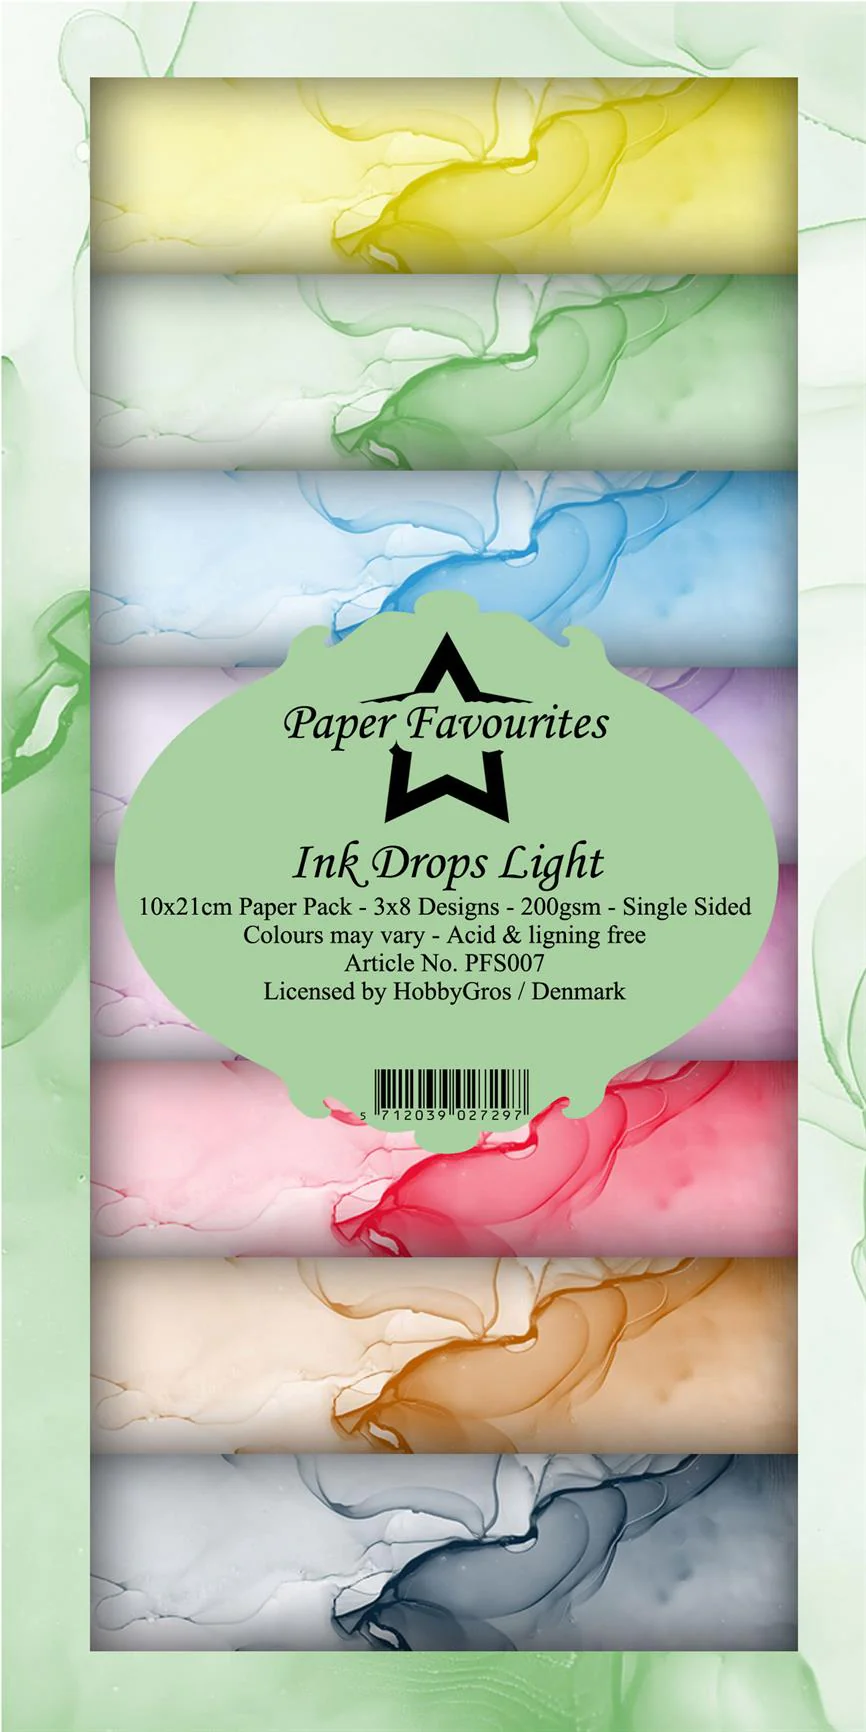 Ink Drops light PFS007